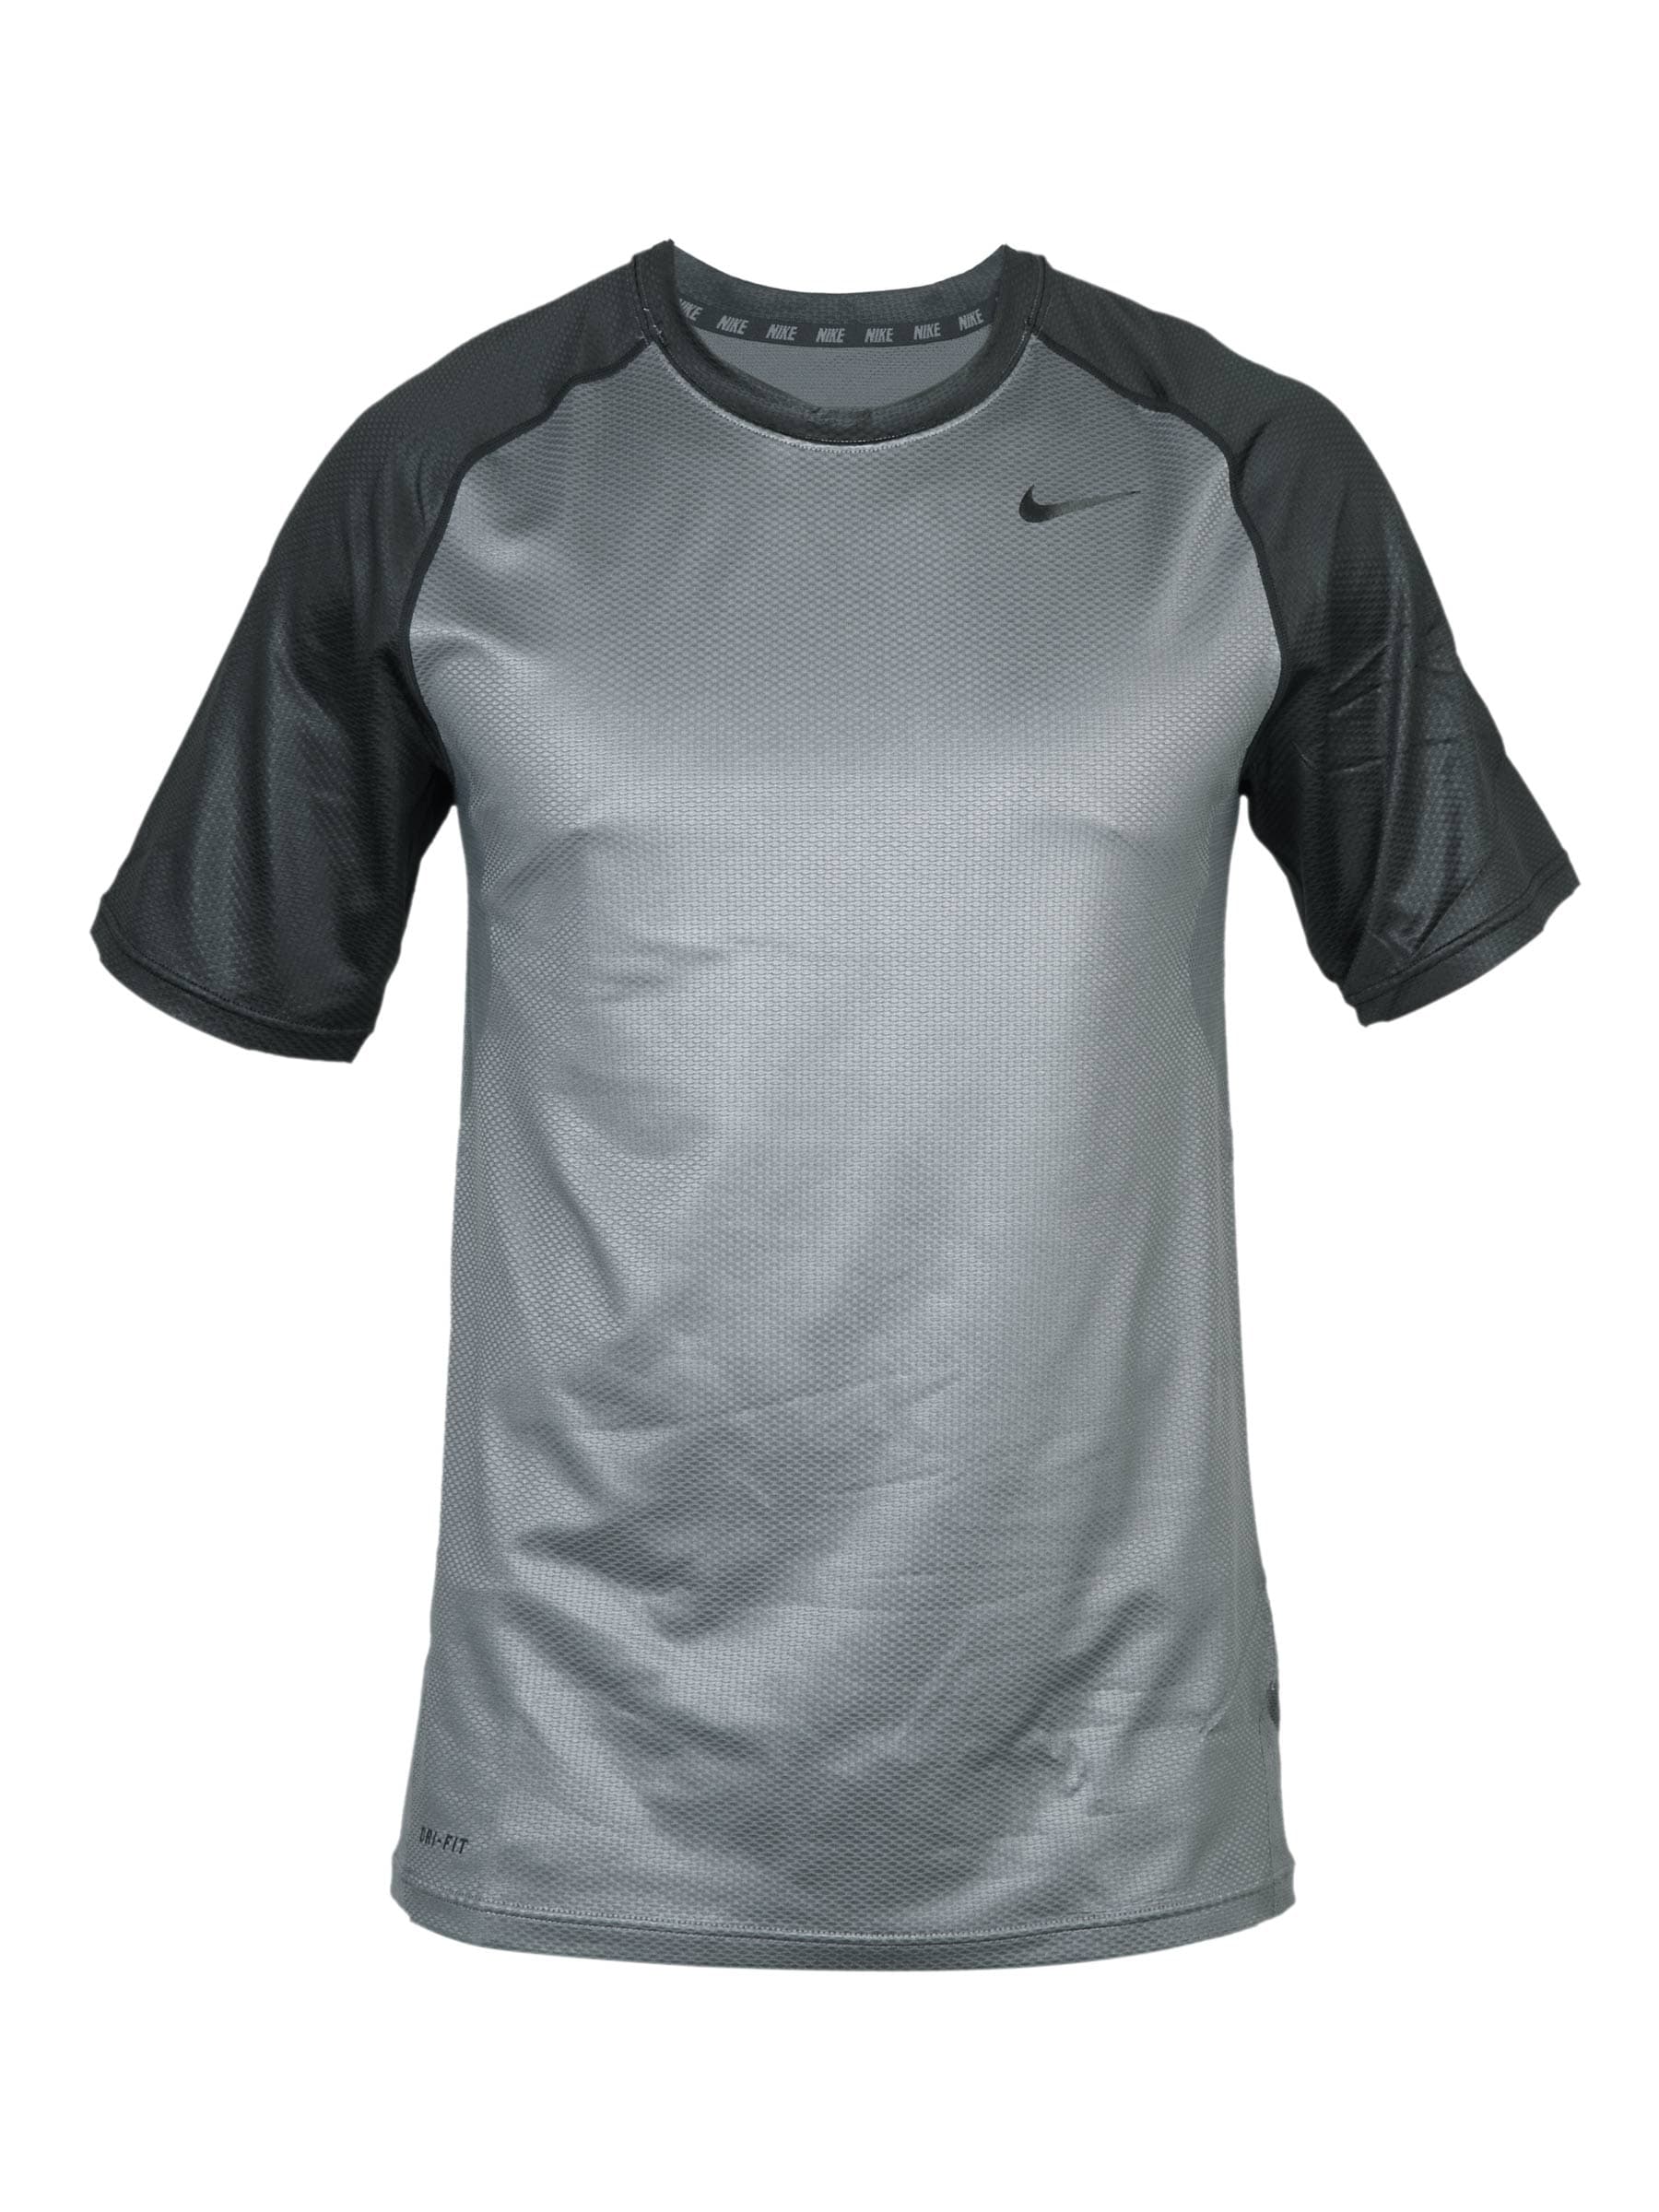 Nike Men's As Vapor Ulti Grey Black T-Shirt